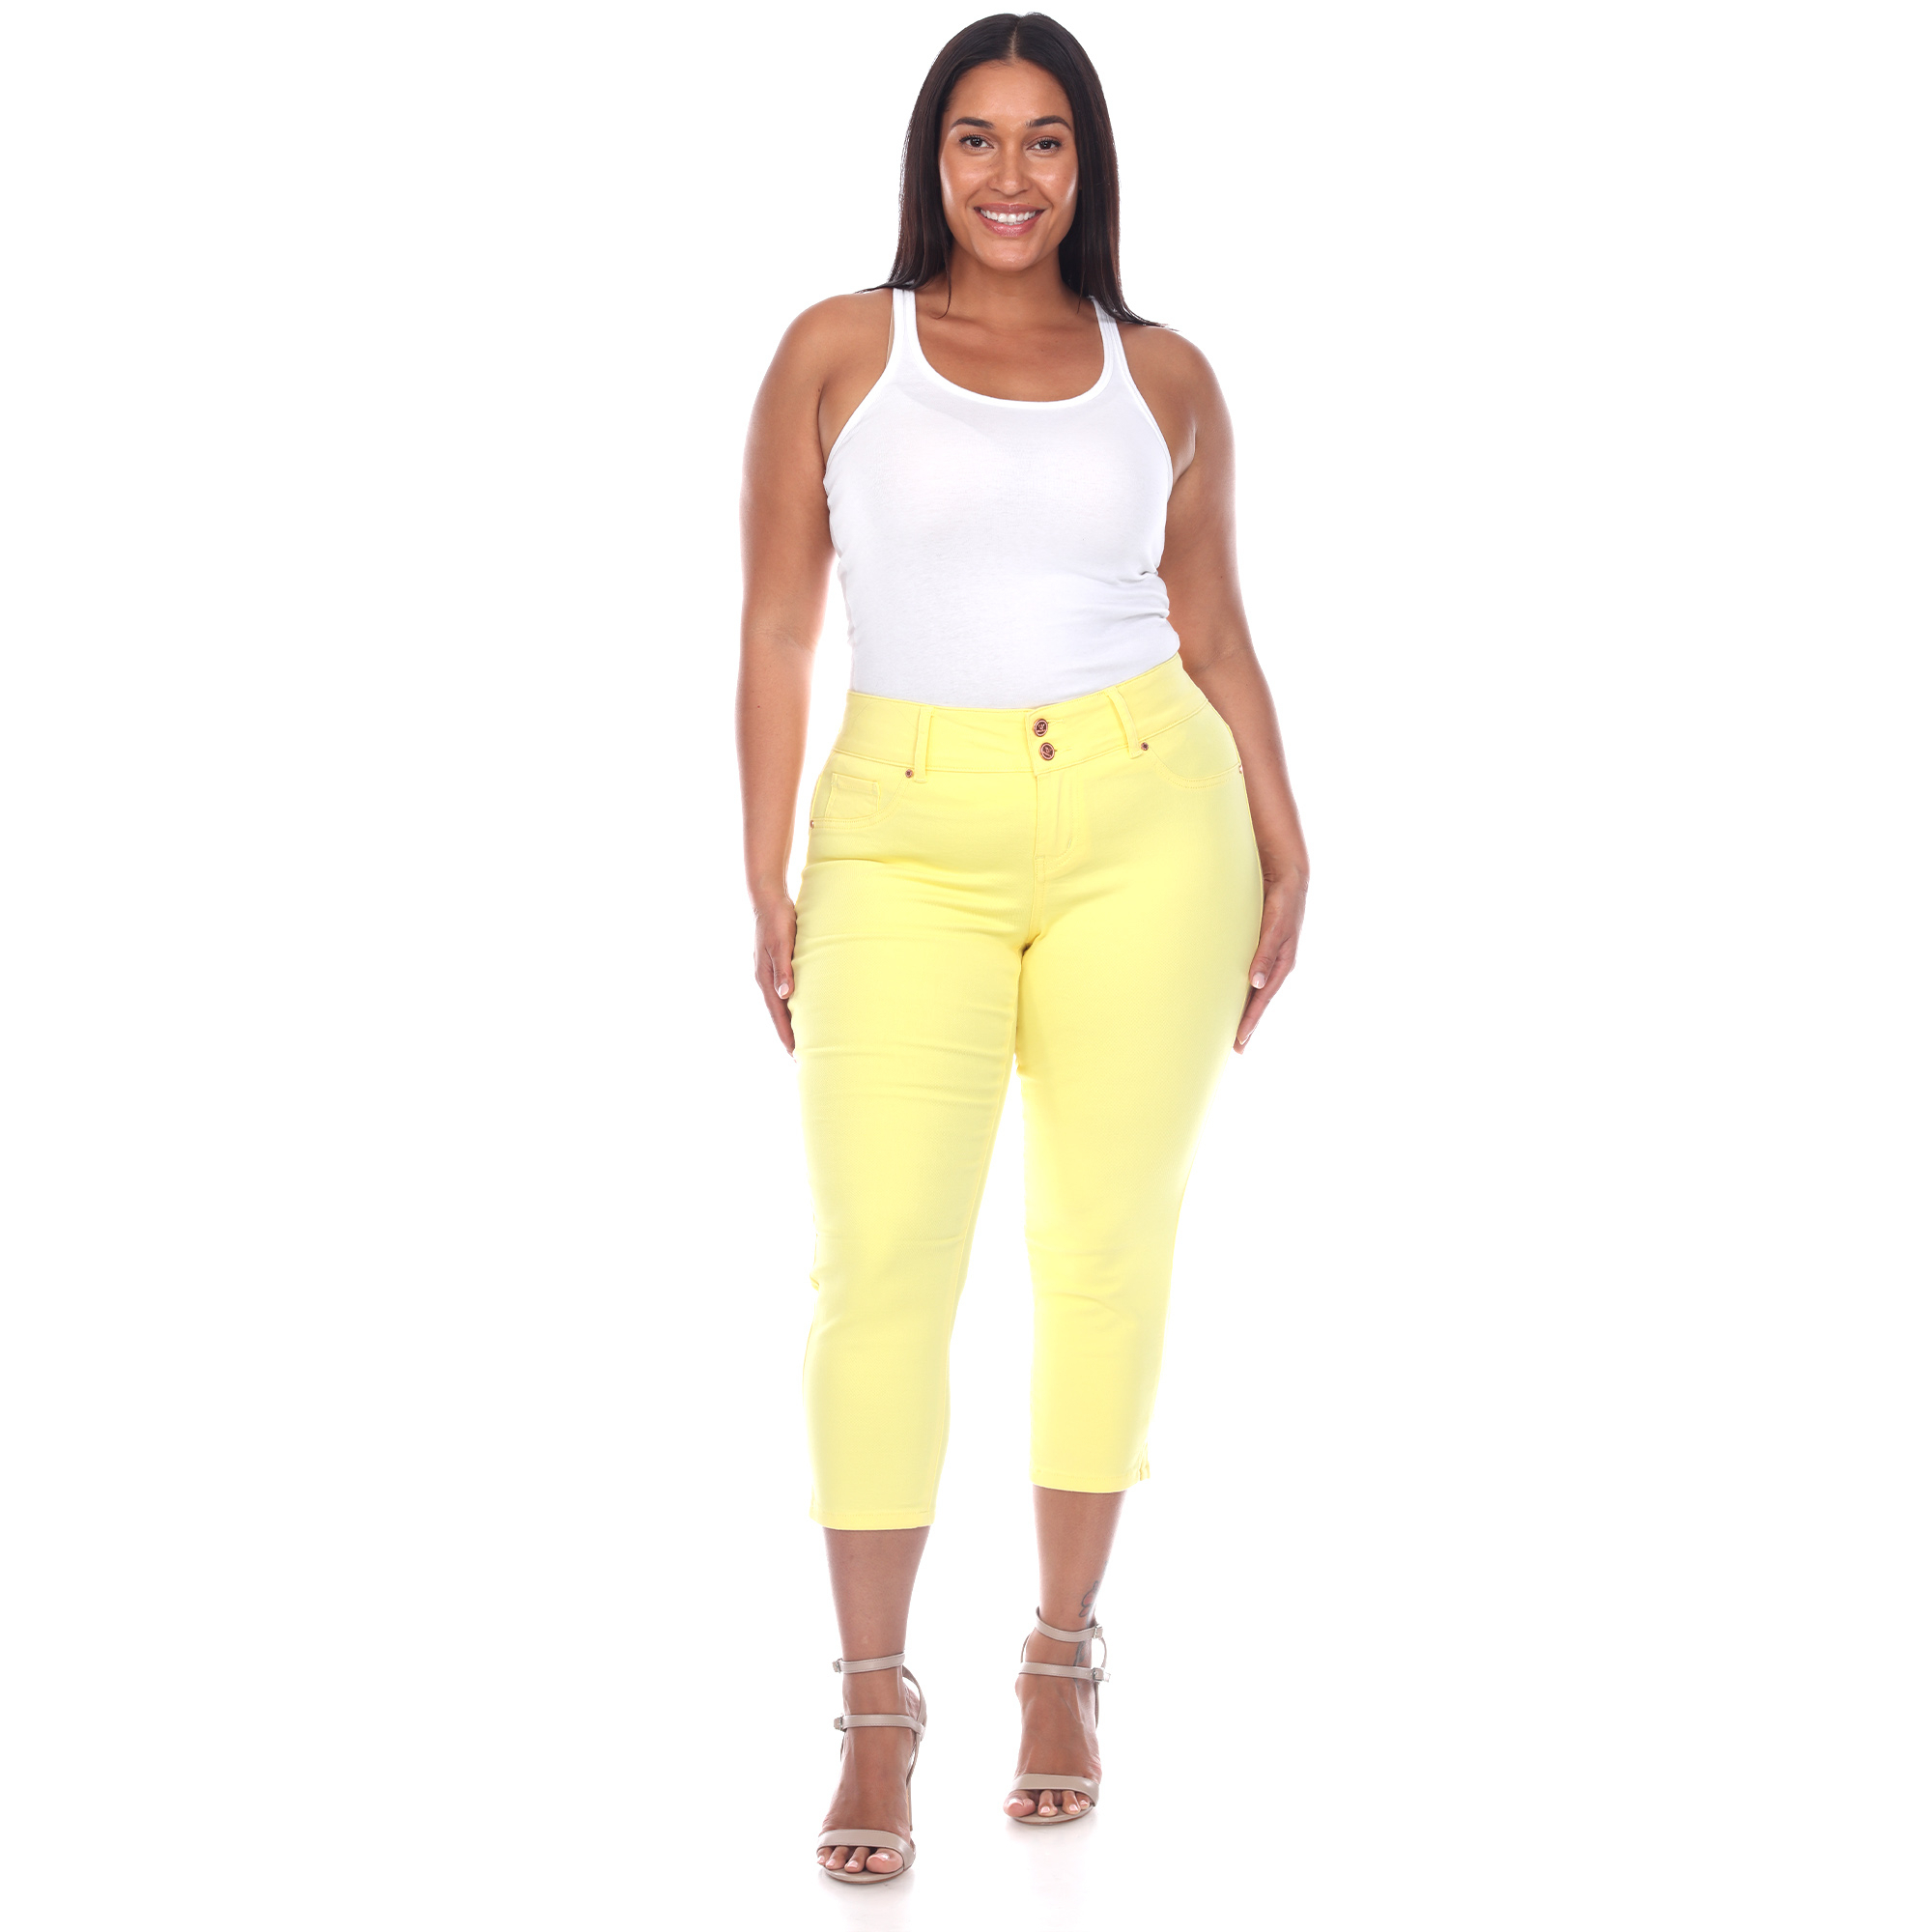 White Mark Womenâs Capri Jeans - Yellow, 14